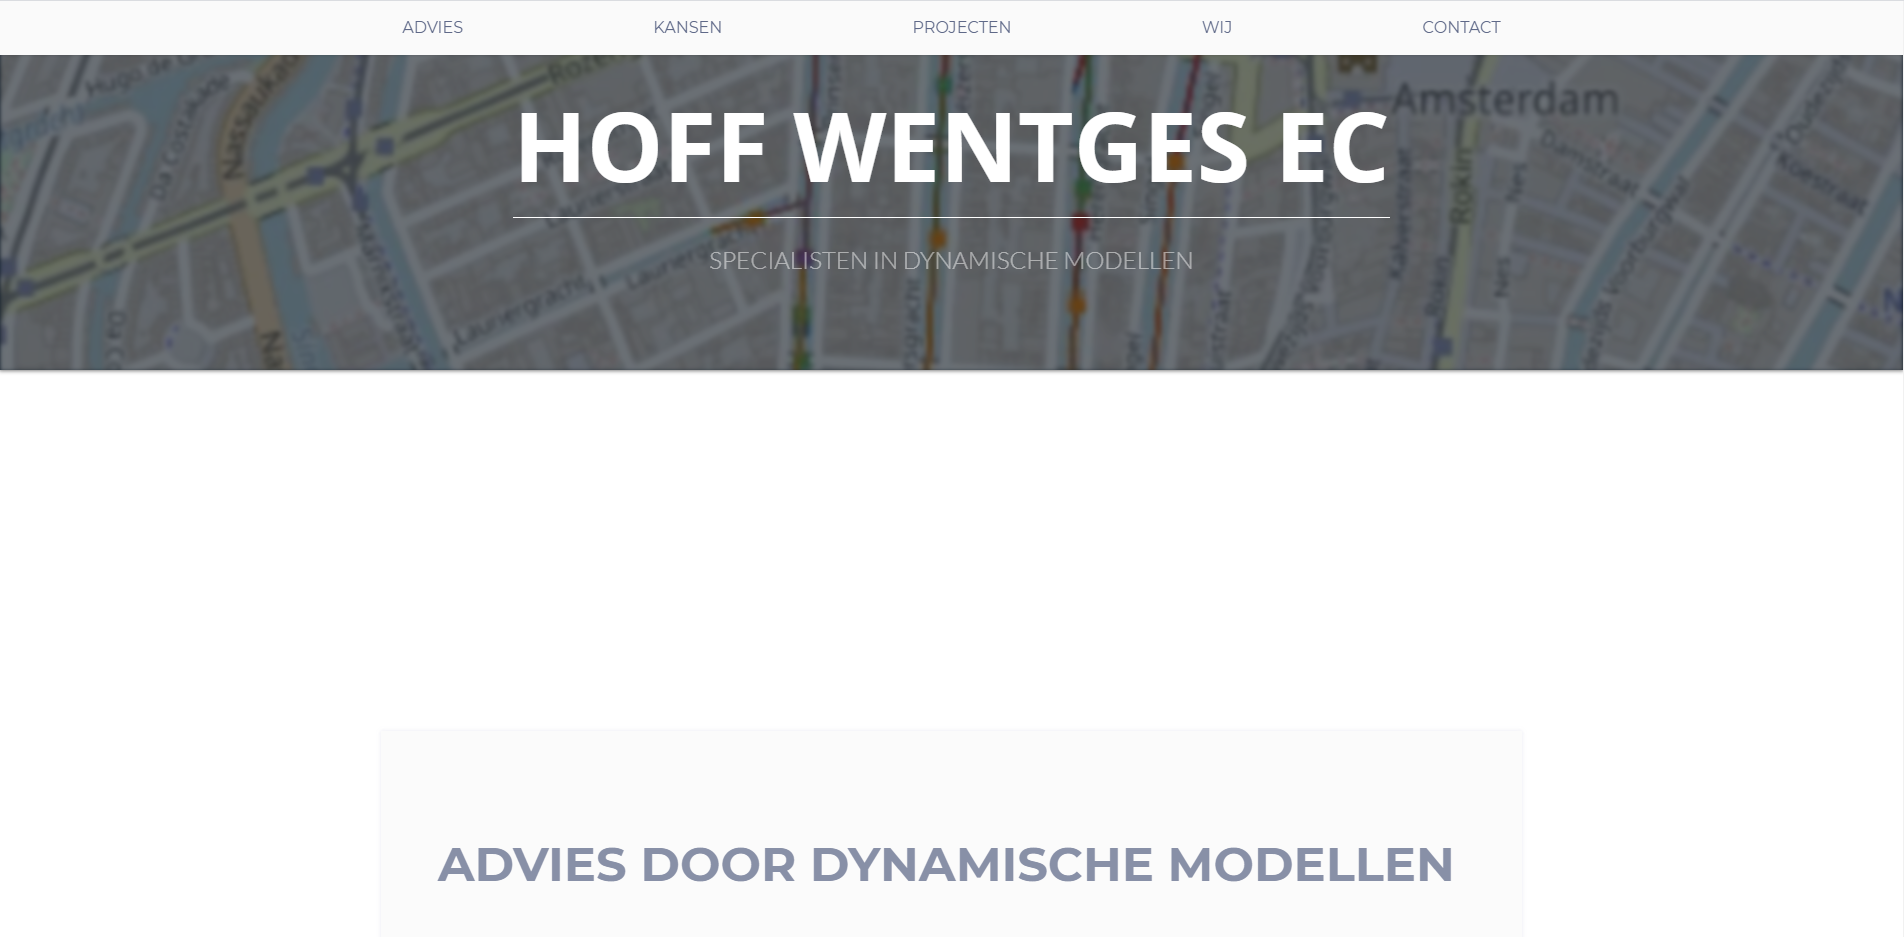 Hoffwentges site screenshot